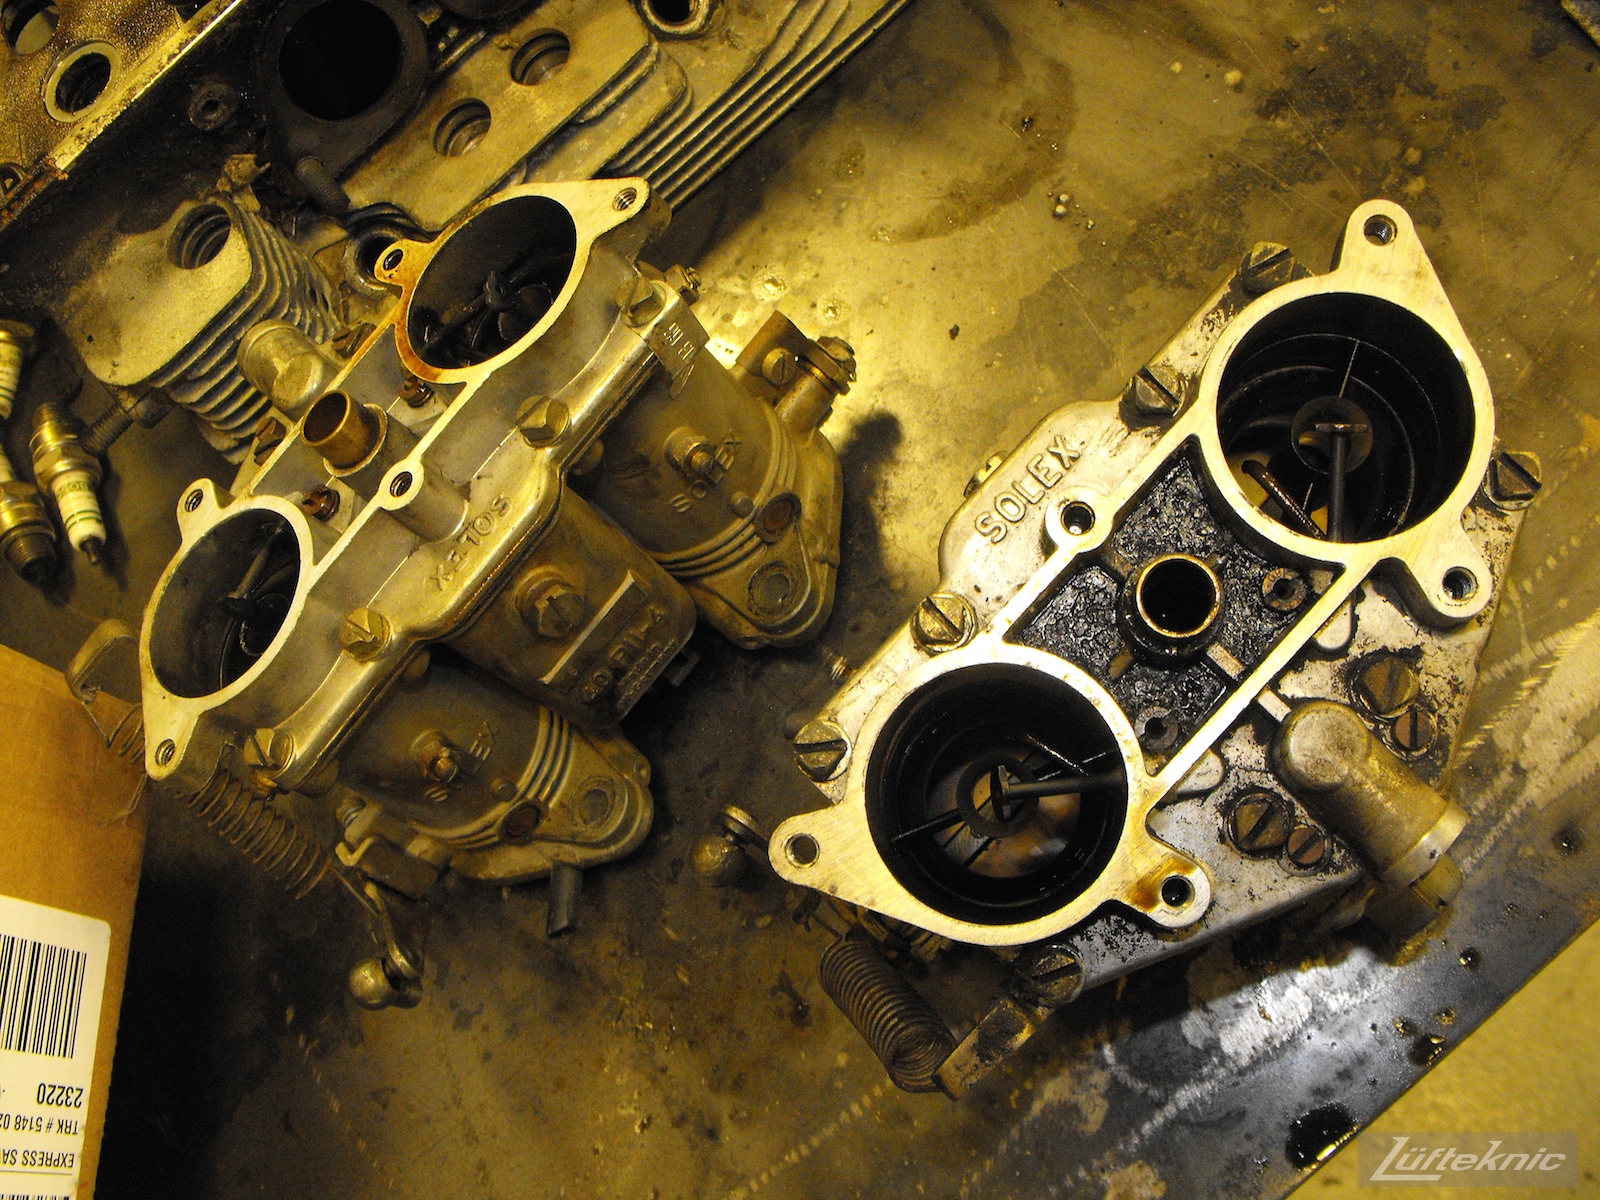 Dirty carburetors from an Irish Green Porsche 912 undergoing restoration at Lufteknic.